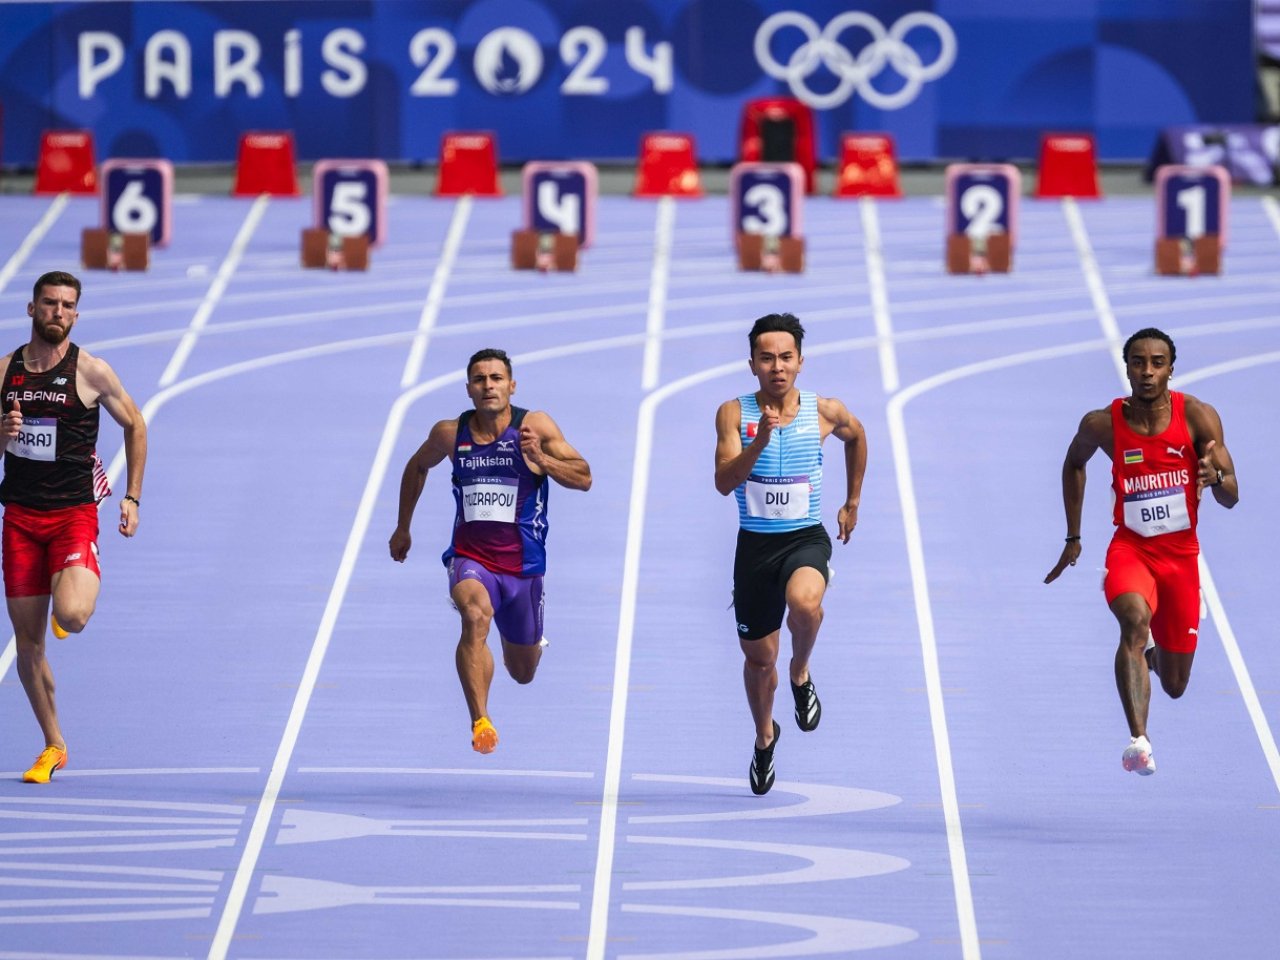 Sprinter Felix Diu eyes new HK 100m record after Paris